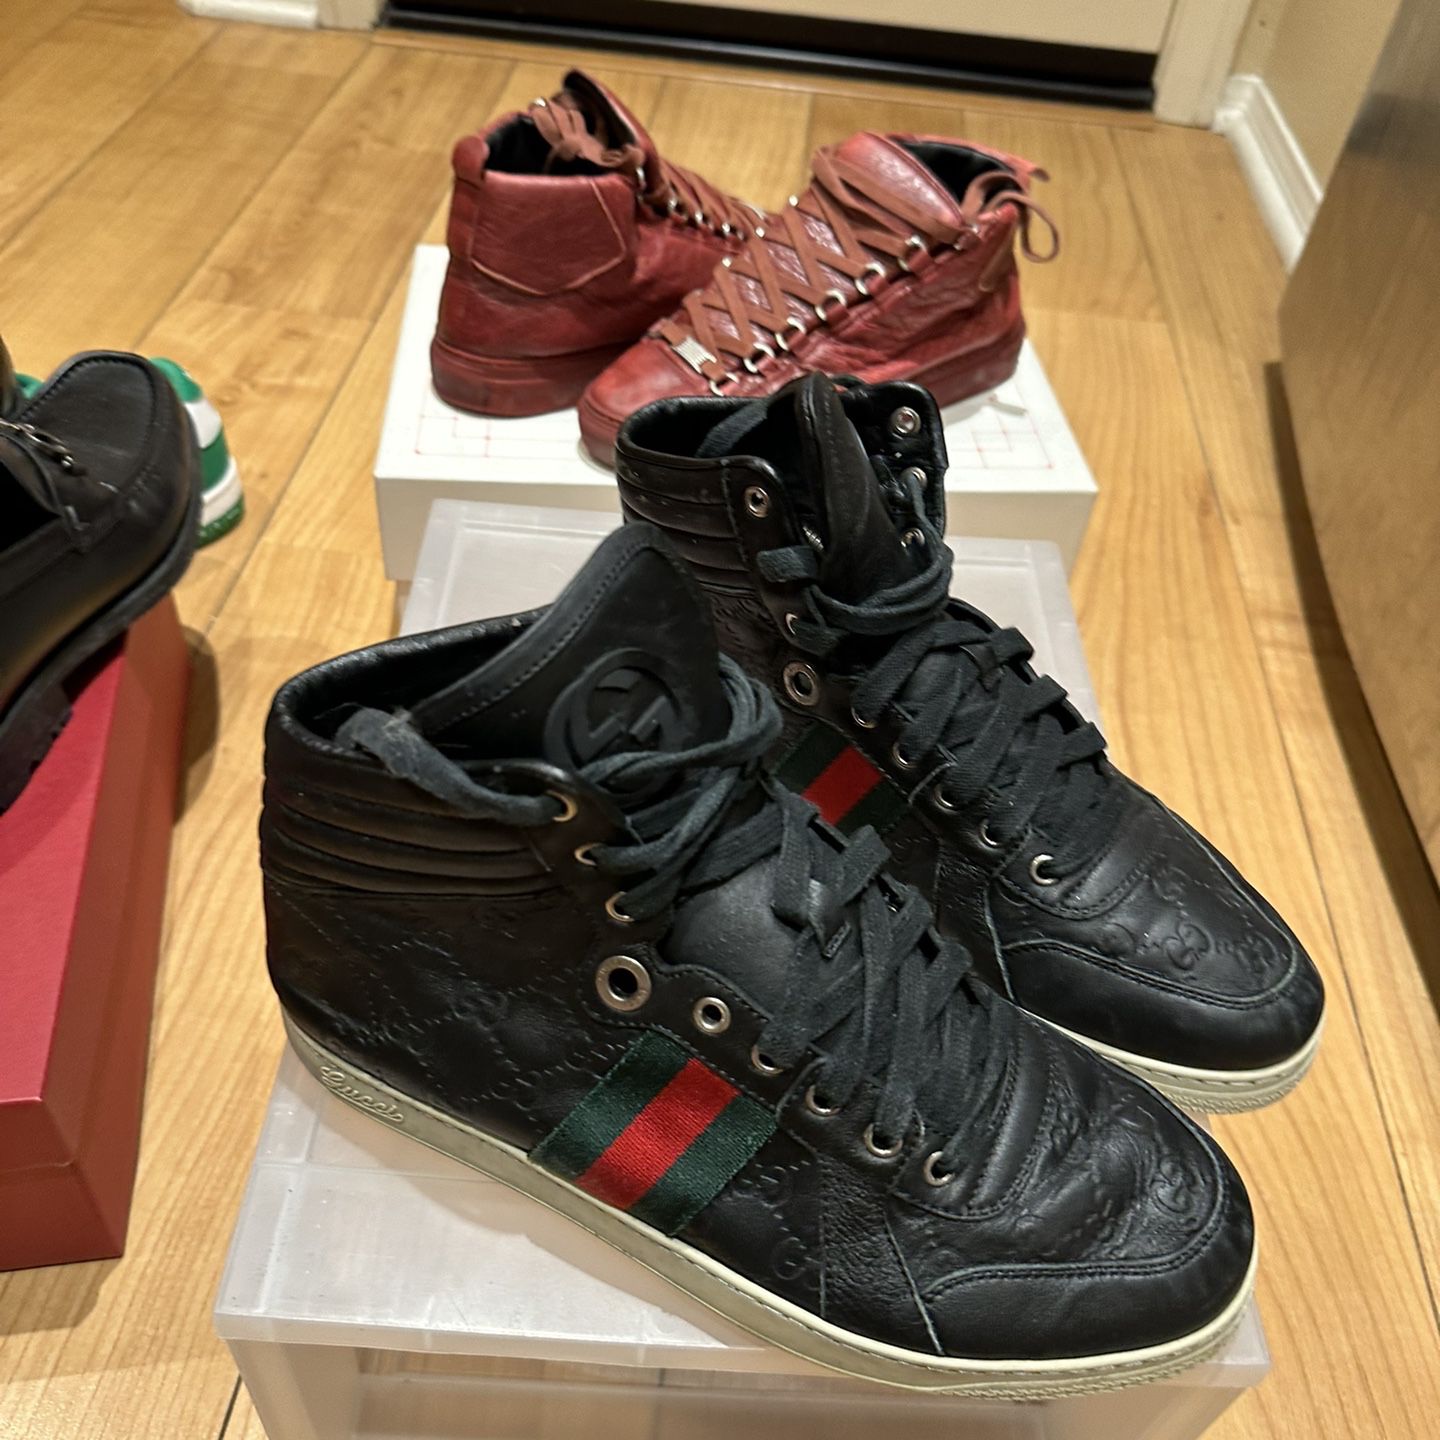 Price Compare: Gucci Ace Sneakers - Shop and Box